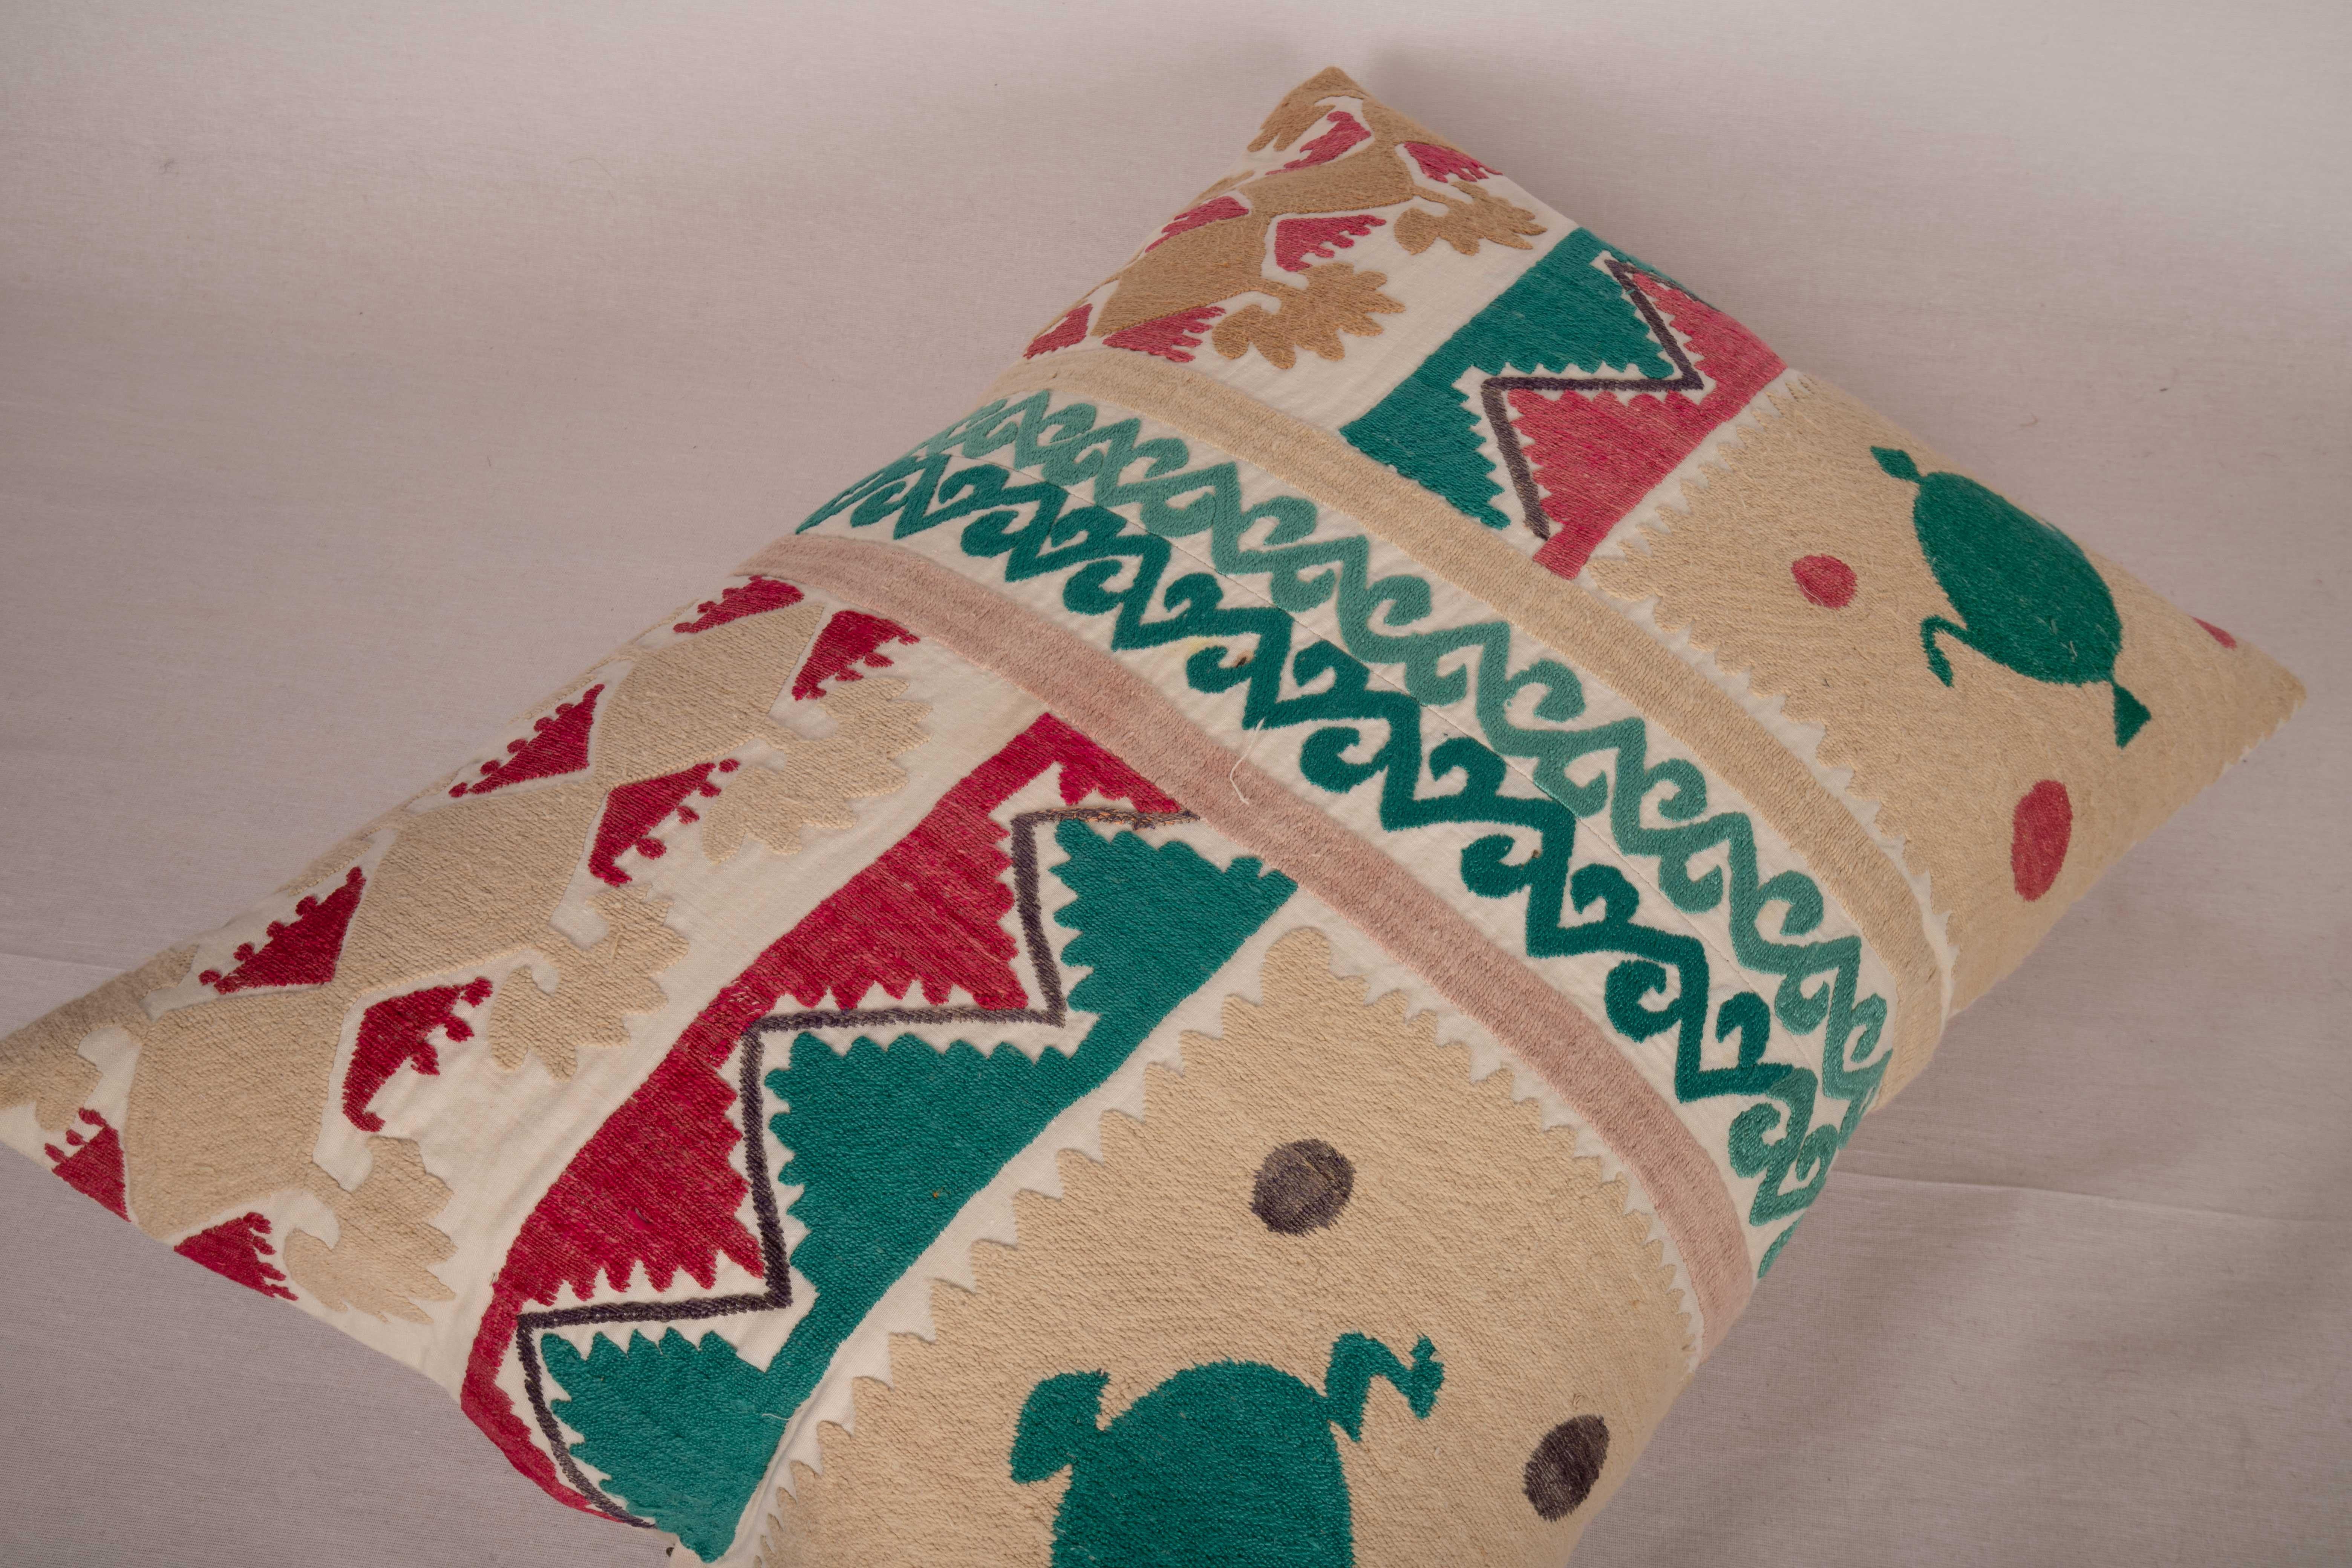 20th Century Mid-20th C. Suzani Pillowcase Made from a Samarkand Suzani